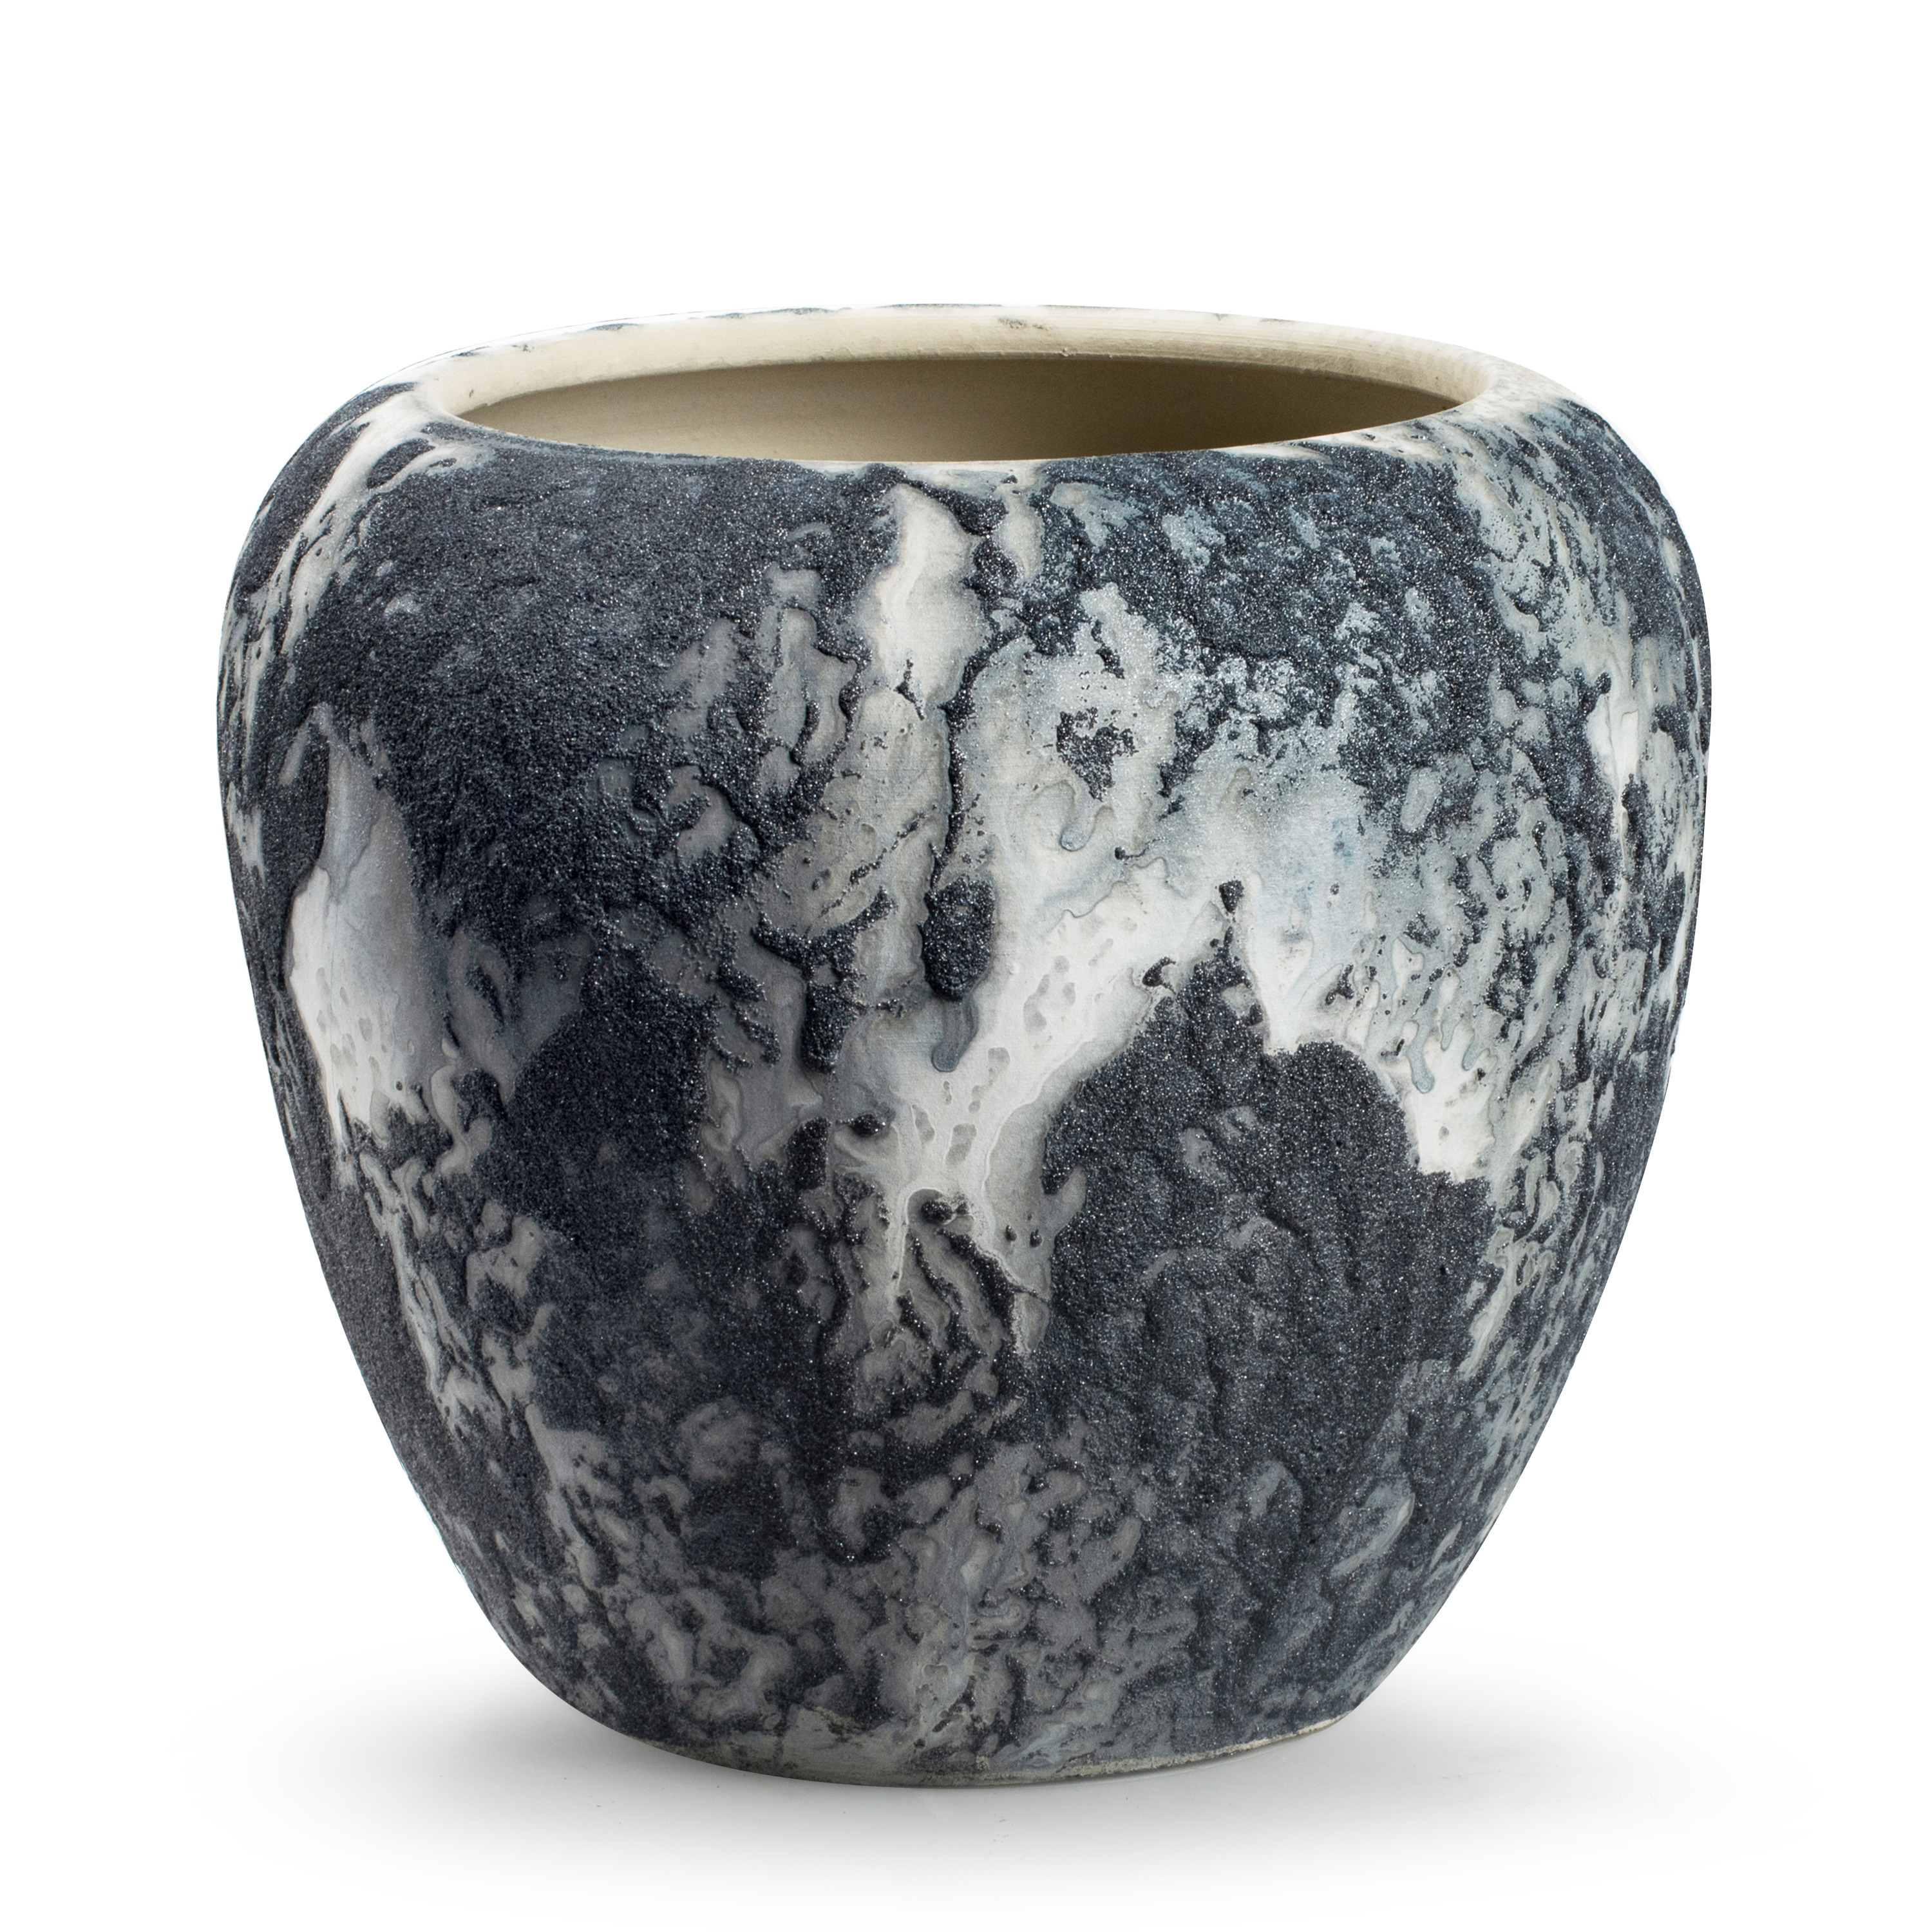 Jodeco Plantenpot/bloempot Marble - wit/zwart - keramiek - D20 x H18 cm -